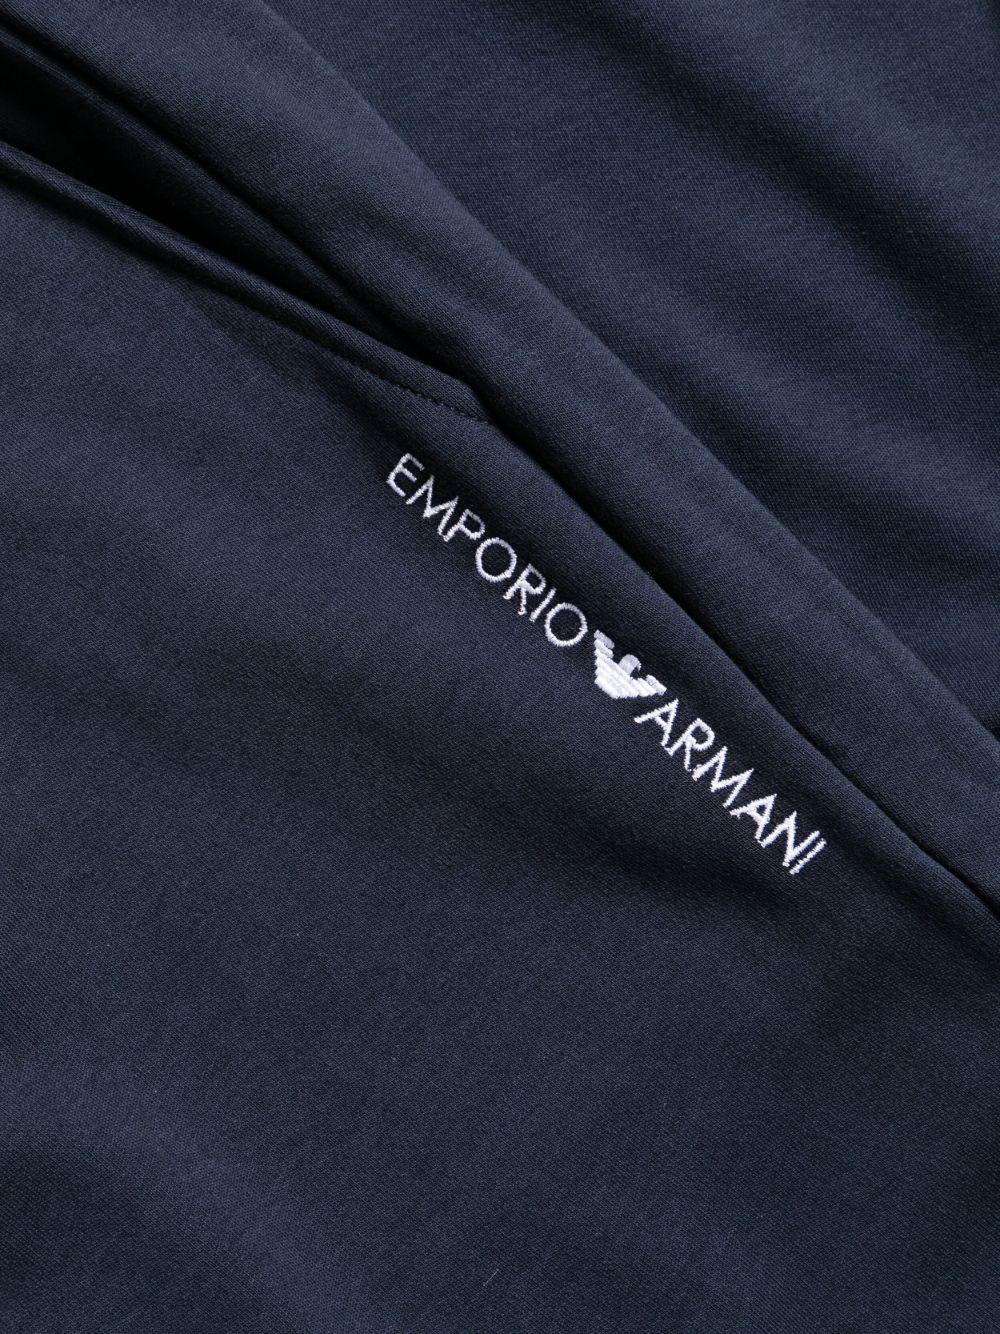 Emporio Armani Pyjama met geborduurd logo Blauw